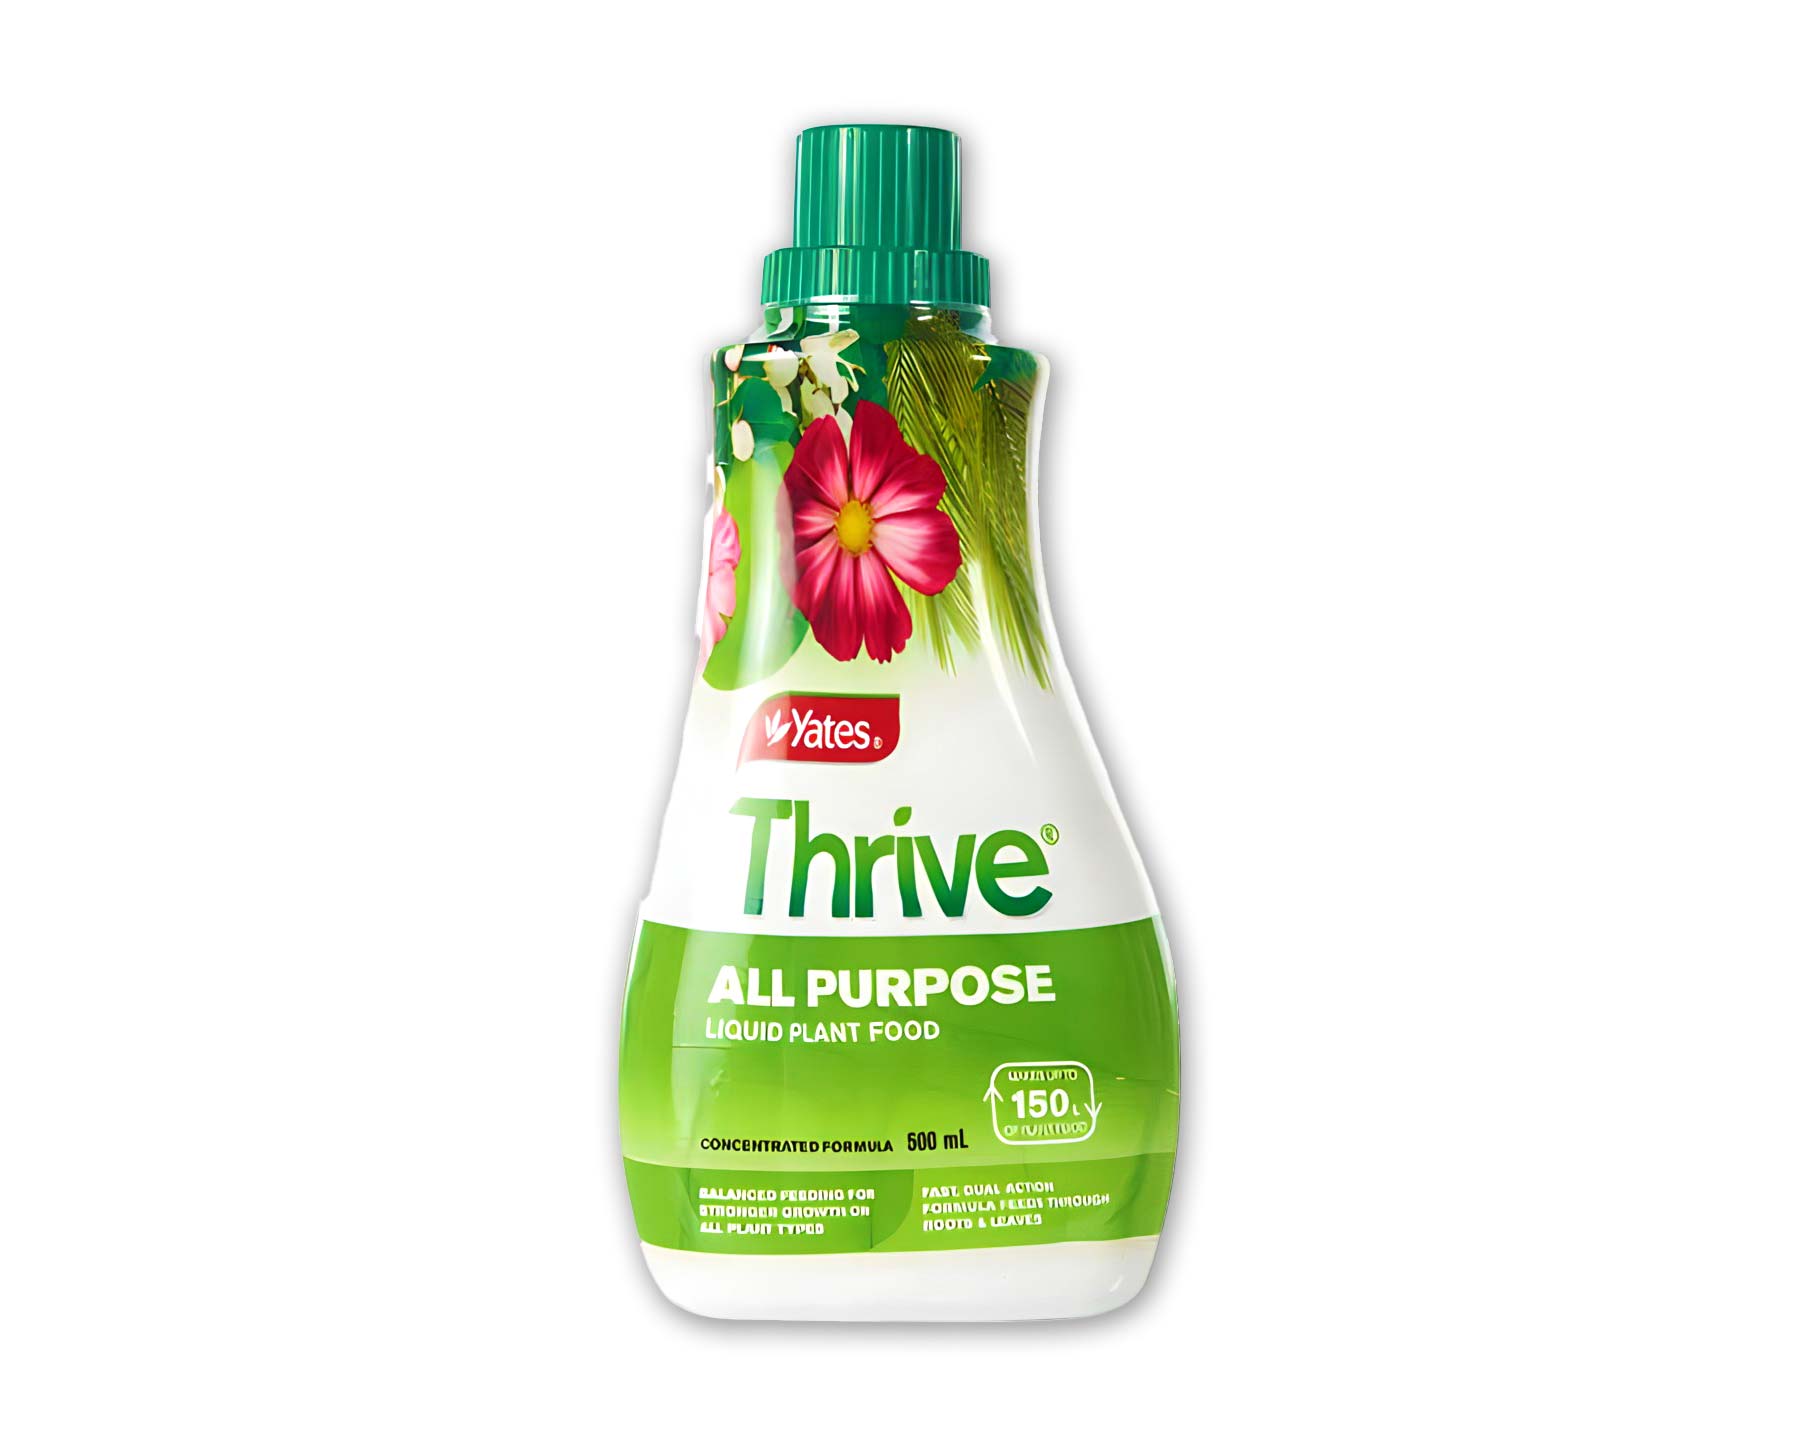 Thrive Liquid All Purpose Plant Food - Yates.jpg